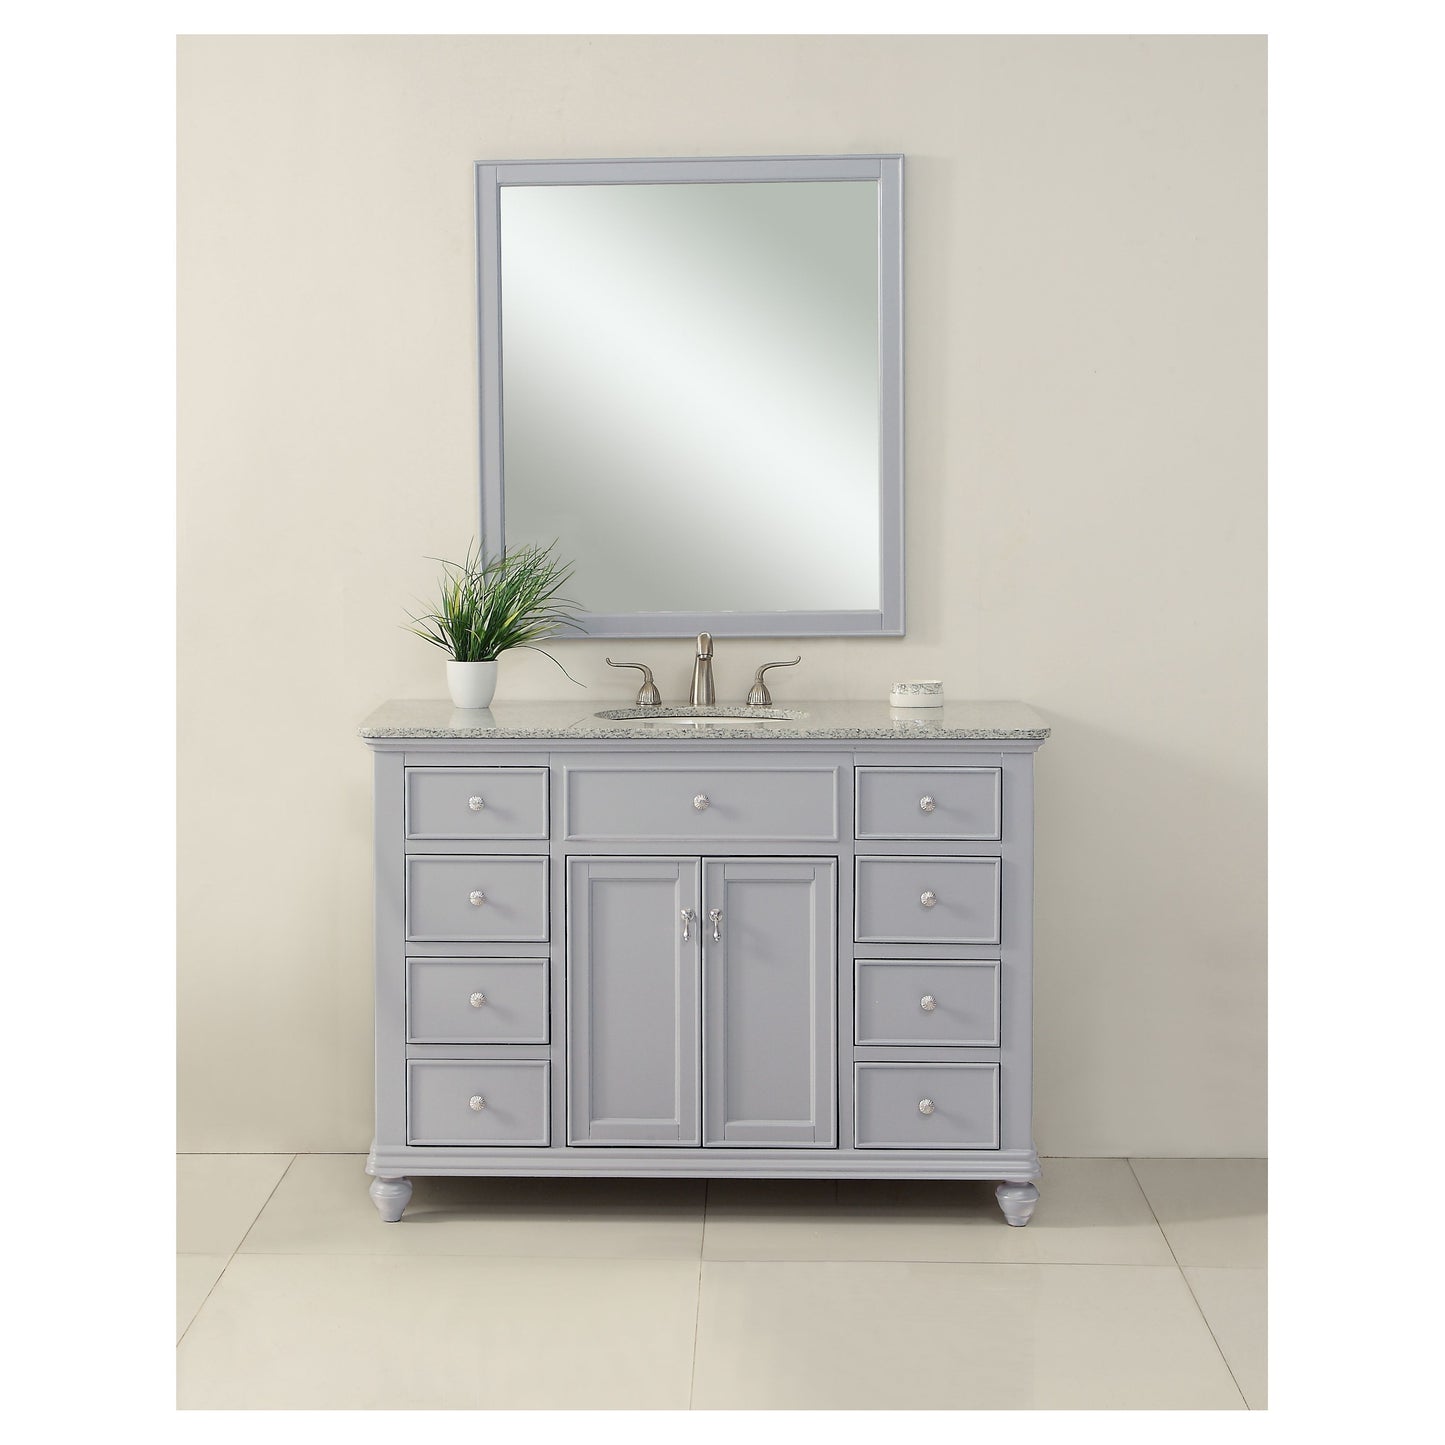 VF12348GR 48" Single Bathroom Vanity Set in Light Grey